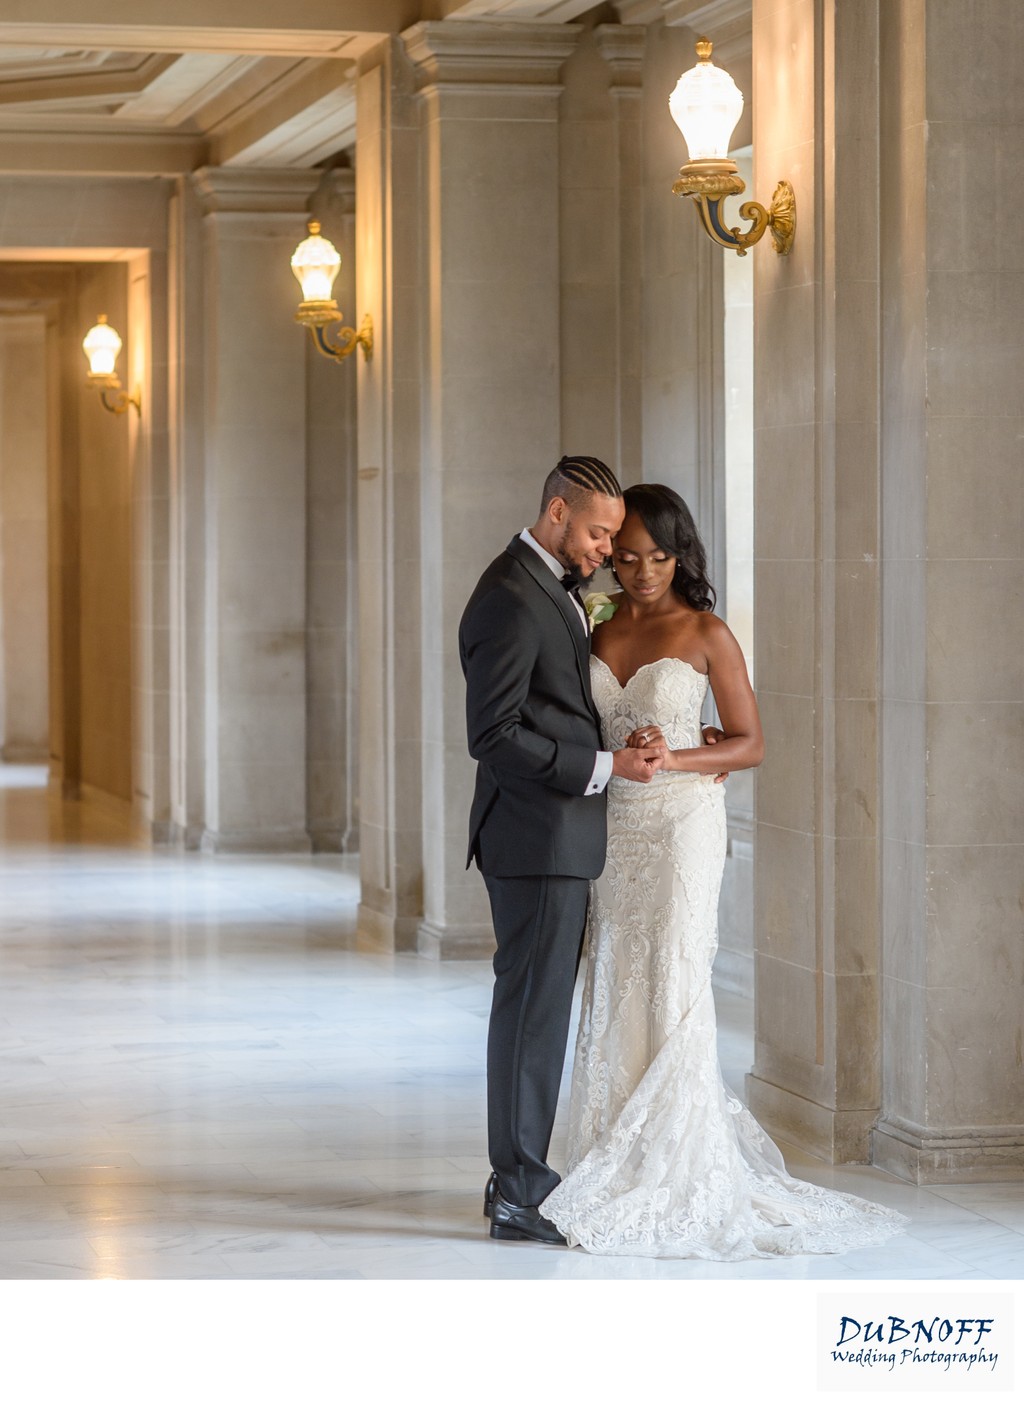 Romantic wedding photography at historic San Francisco city hall